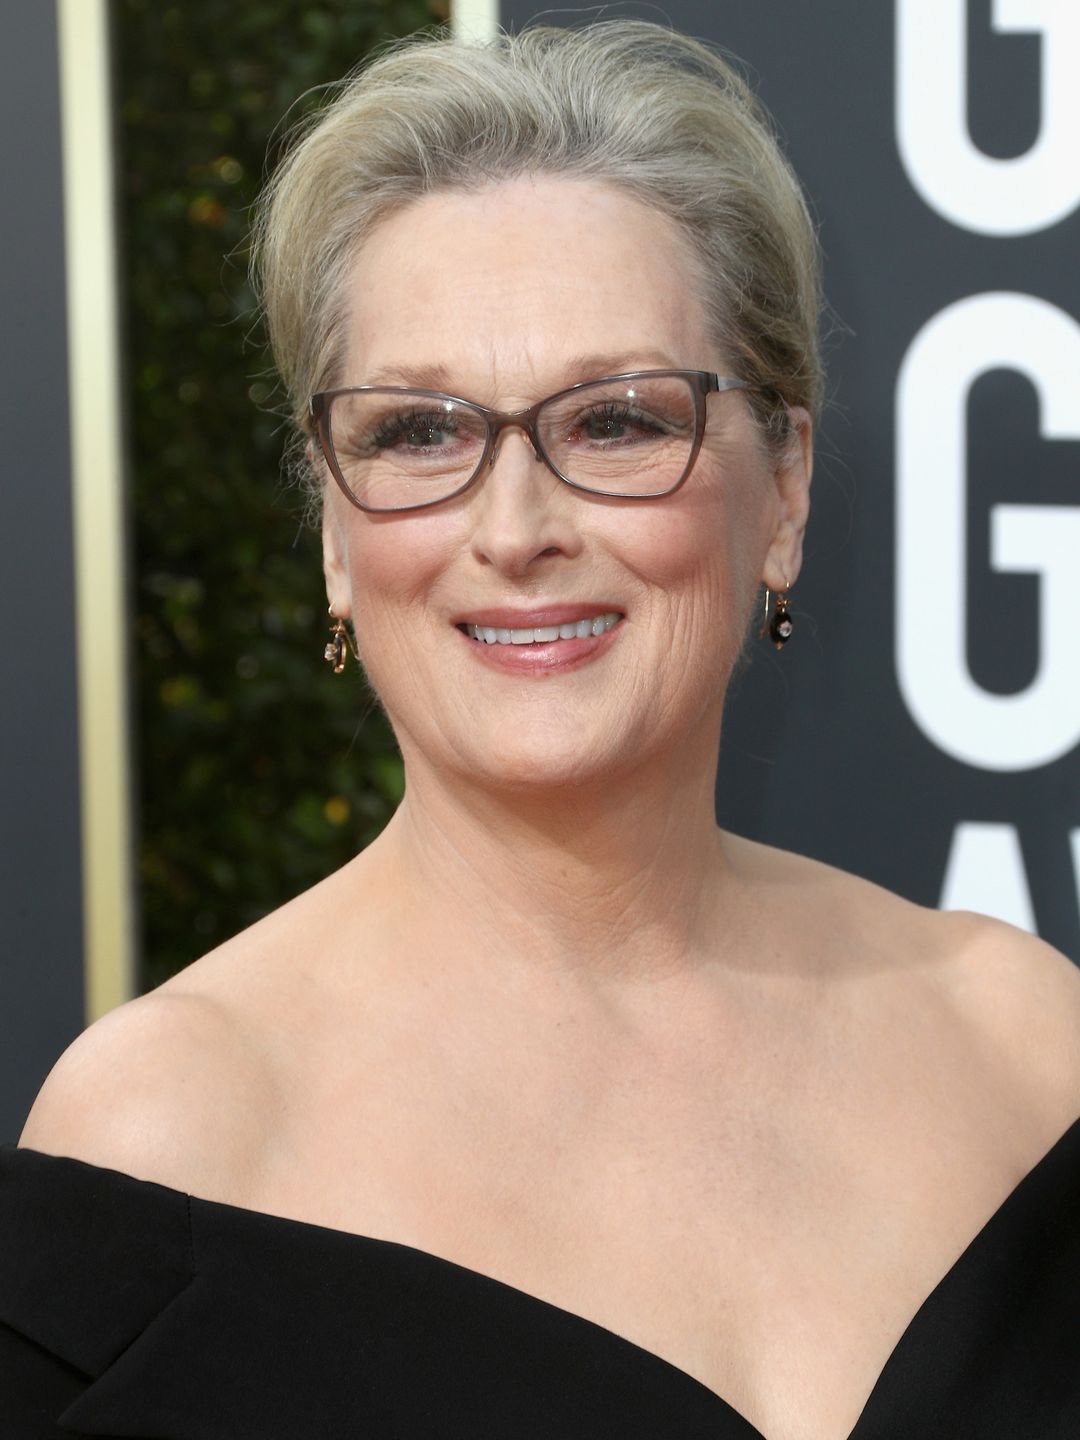 Meryl Streep in real life